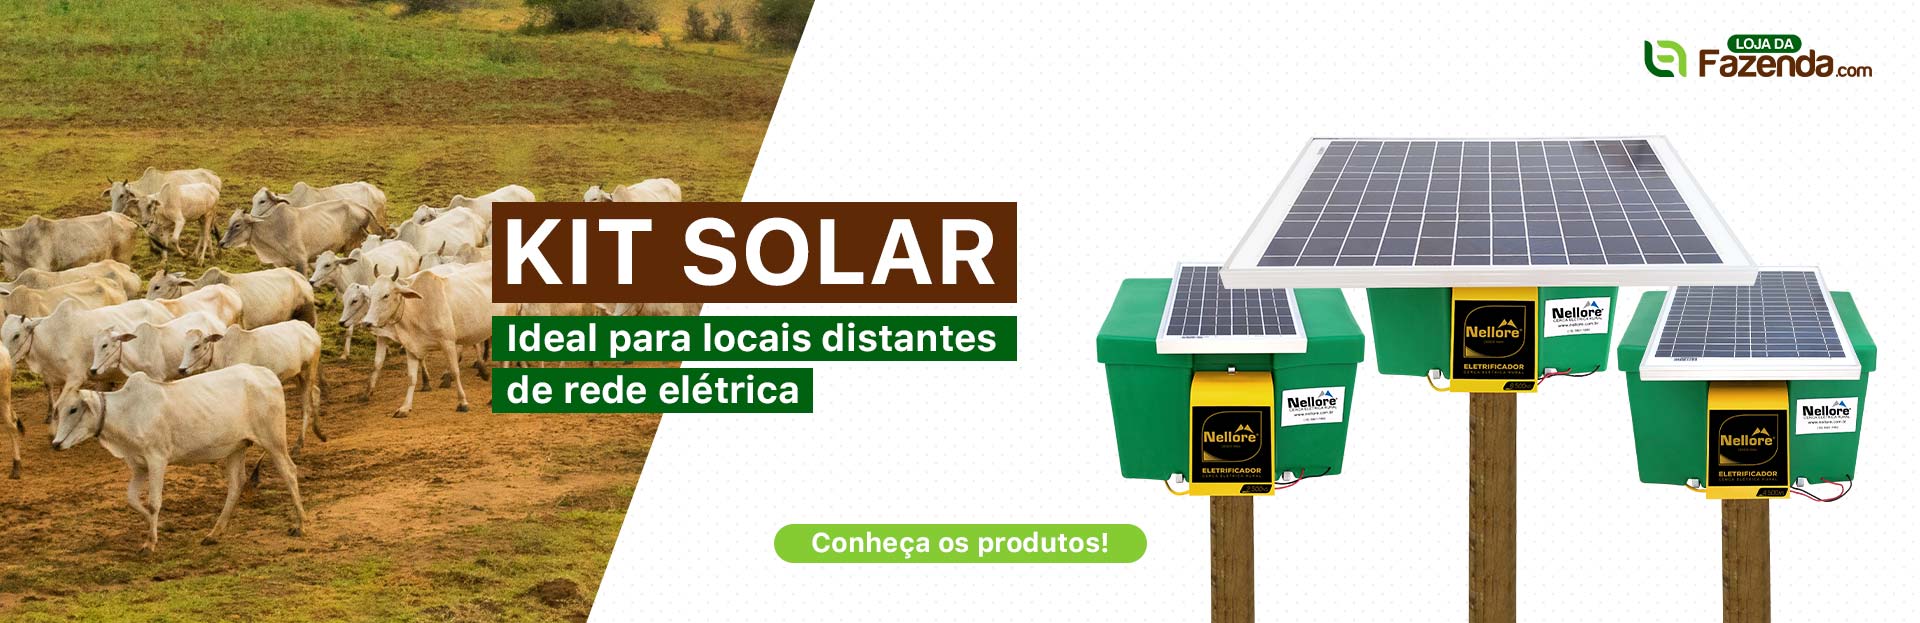 03 - Kit Solar